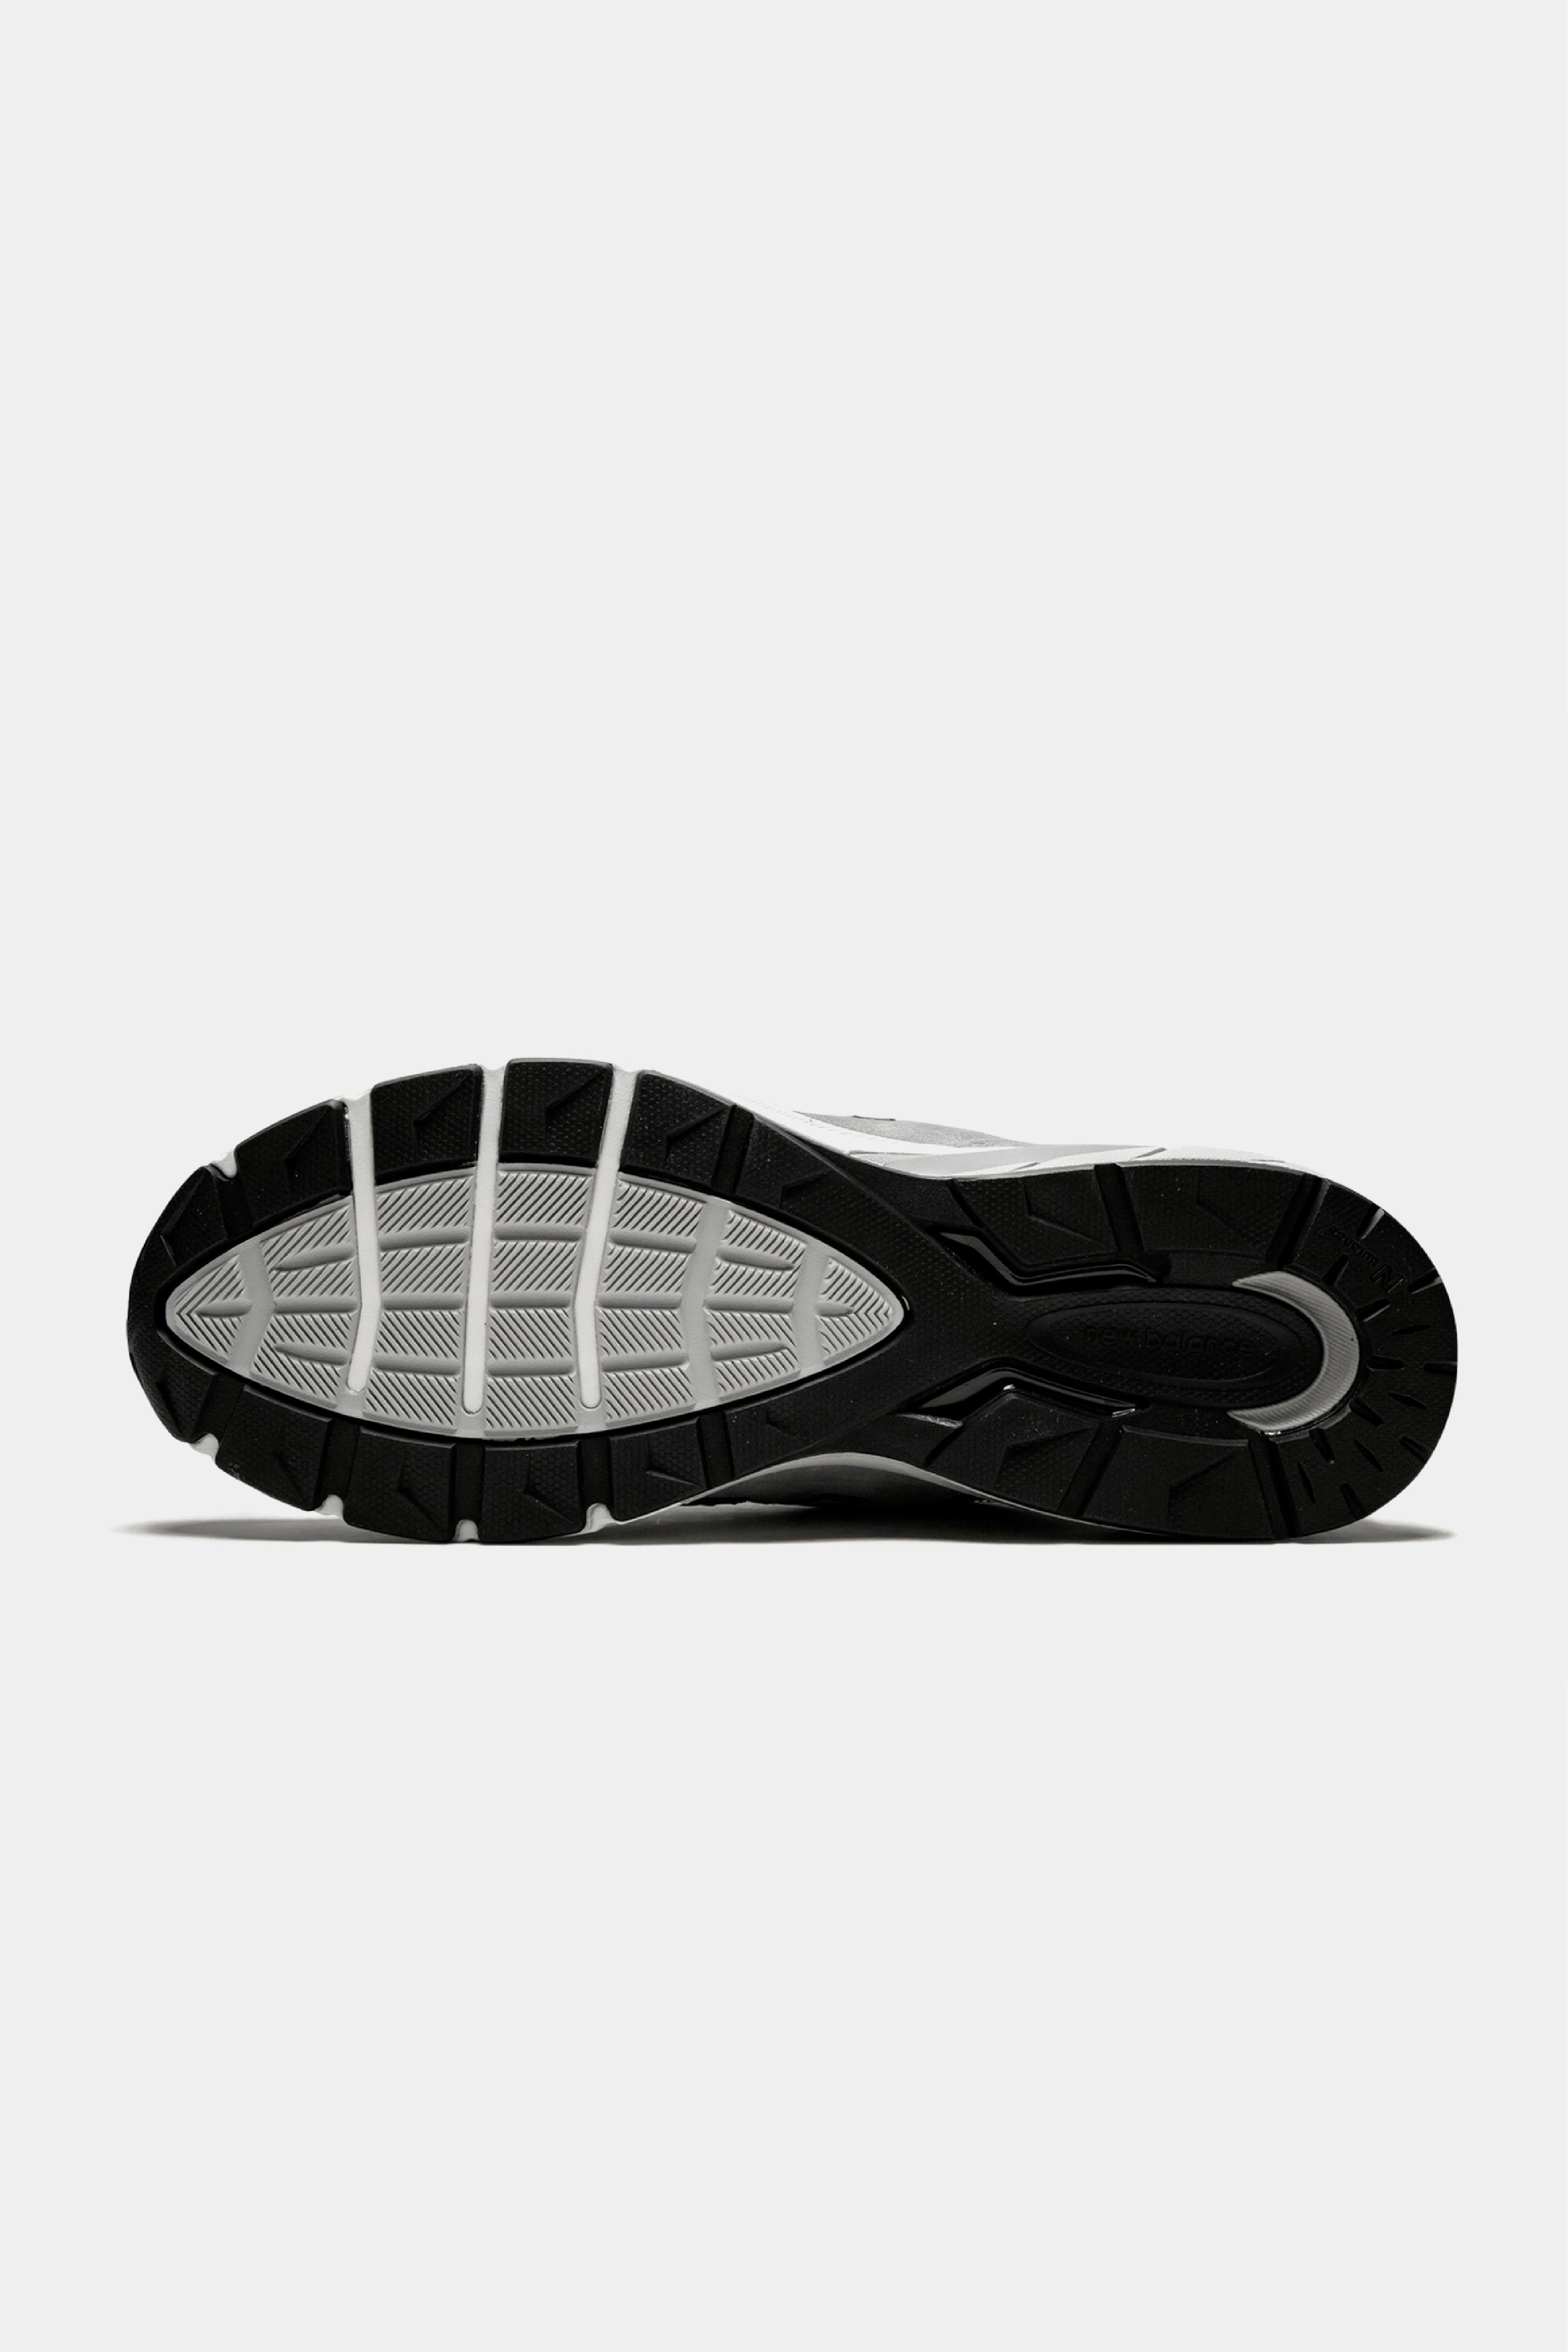 Selectshop FRAME - NEW BALANCE 990v5 "Grey" Footwear Concept Store Dubai